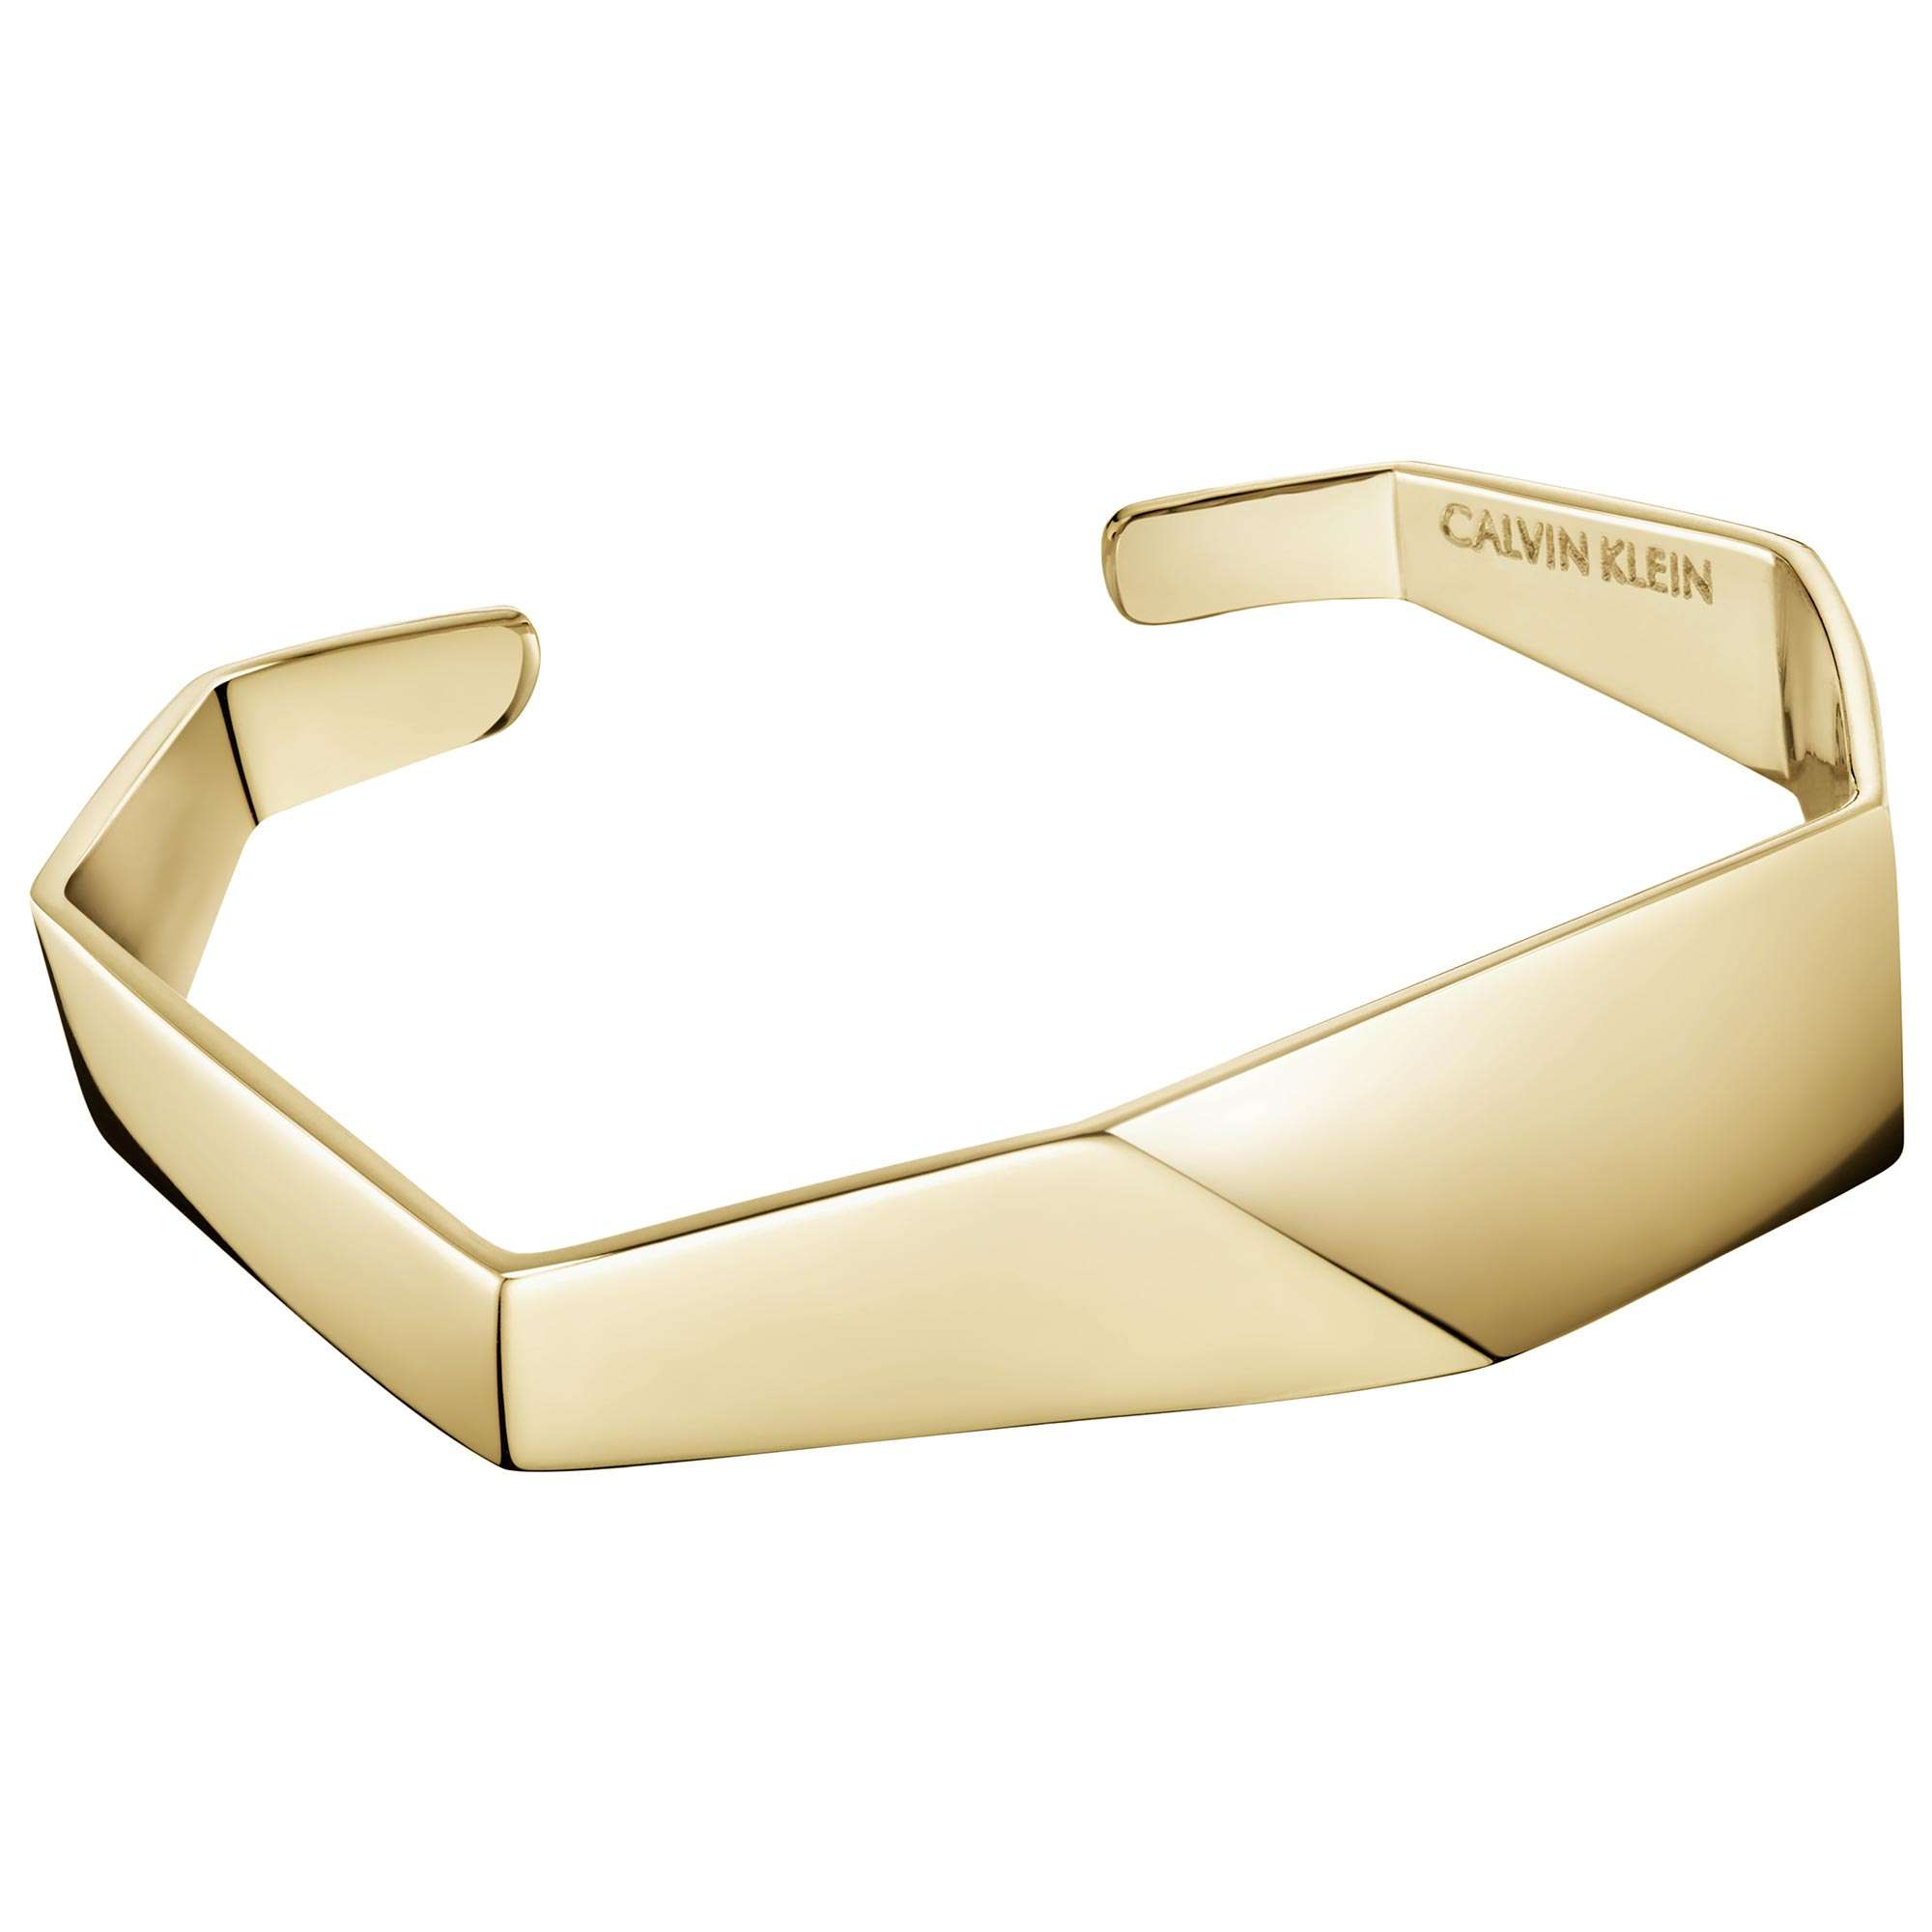 Introducir 36+ imagen calvin klein gold bracelet